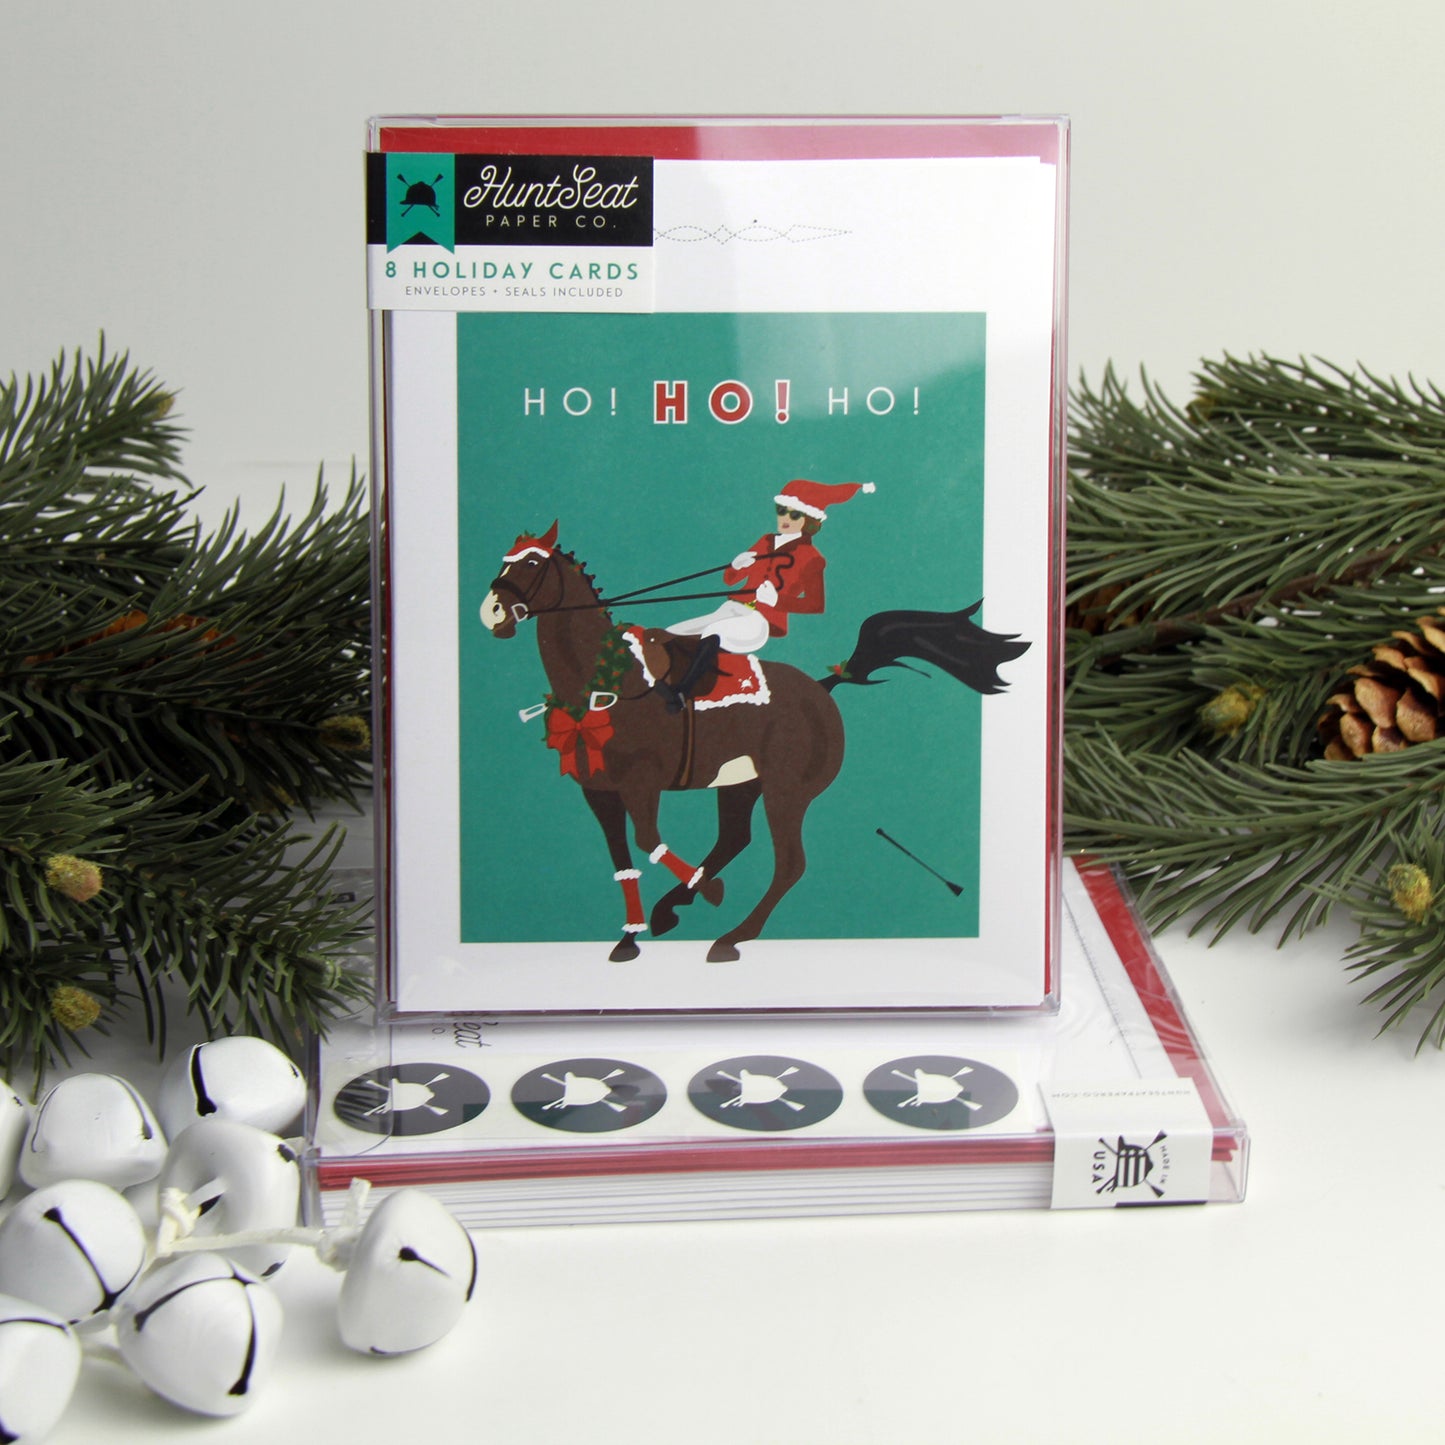 Ho! Ho! Ho! Equestrian Christmas Card